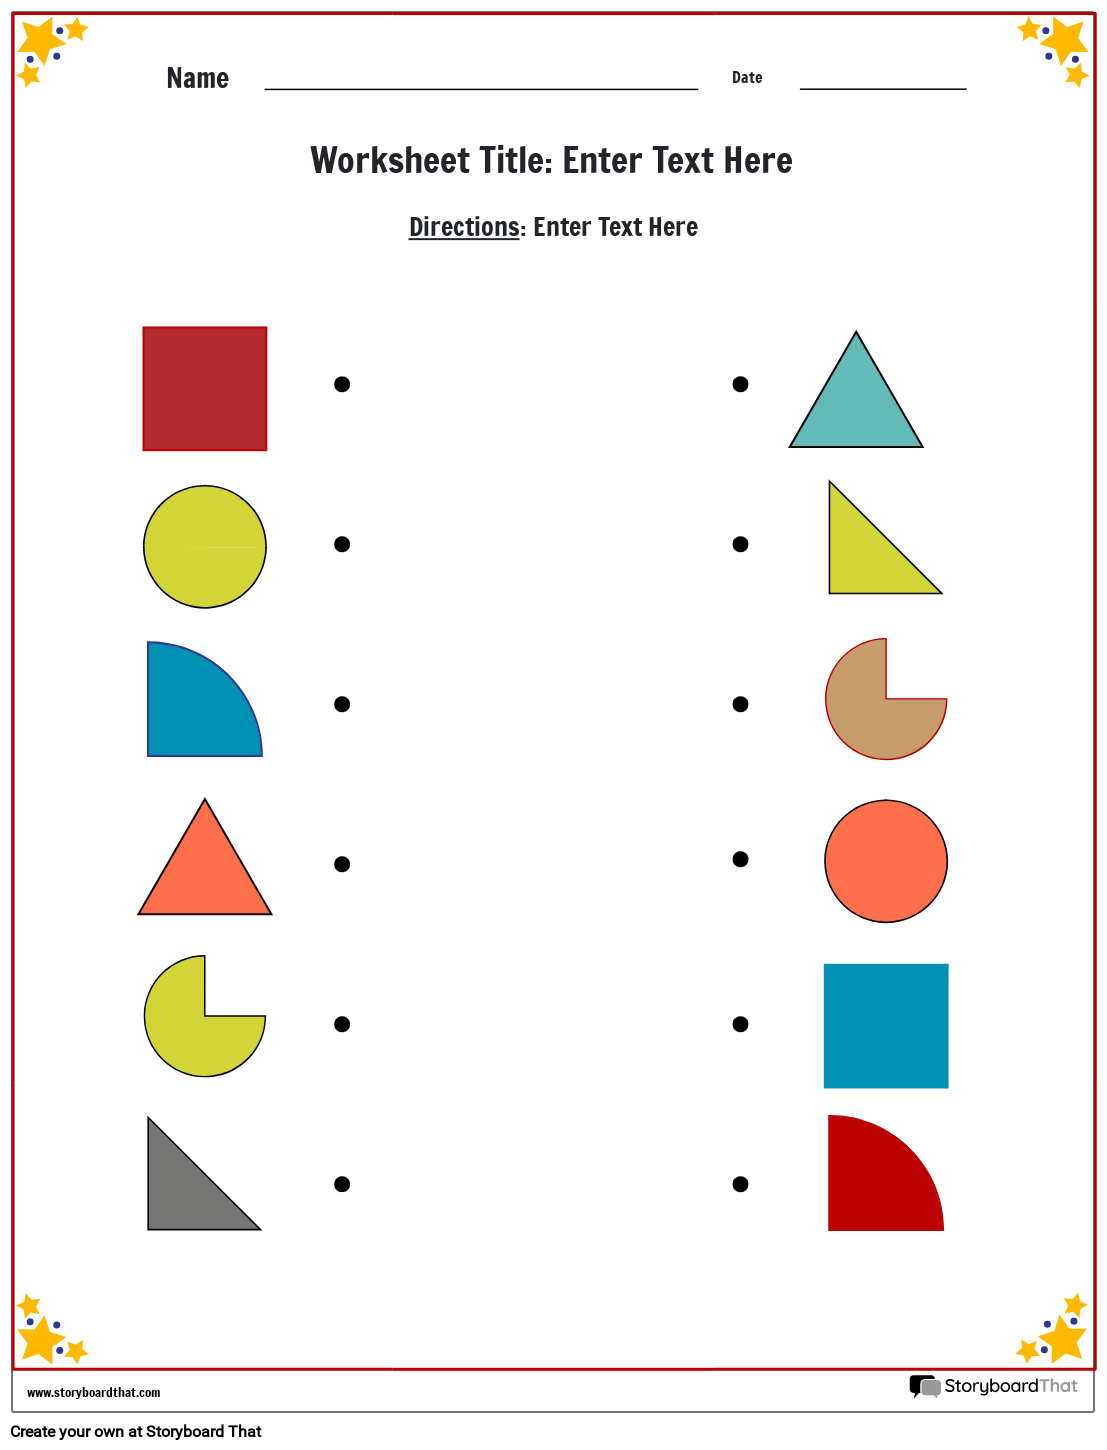 Free Printable Shapes Chart  Printable shapes, Shapes worksheets